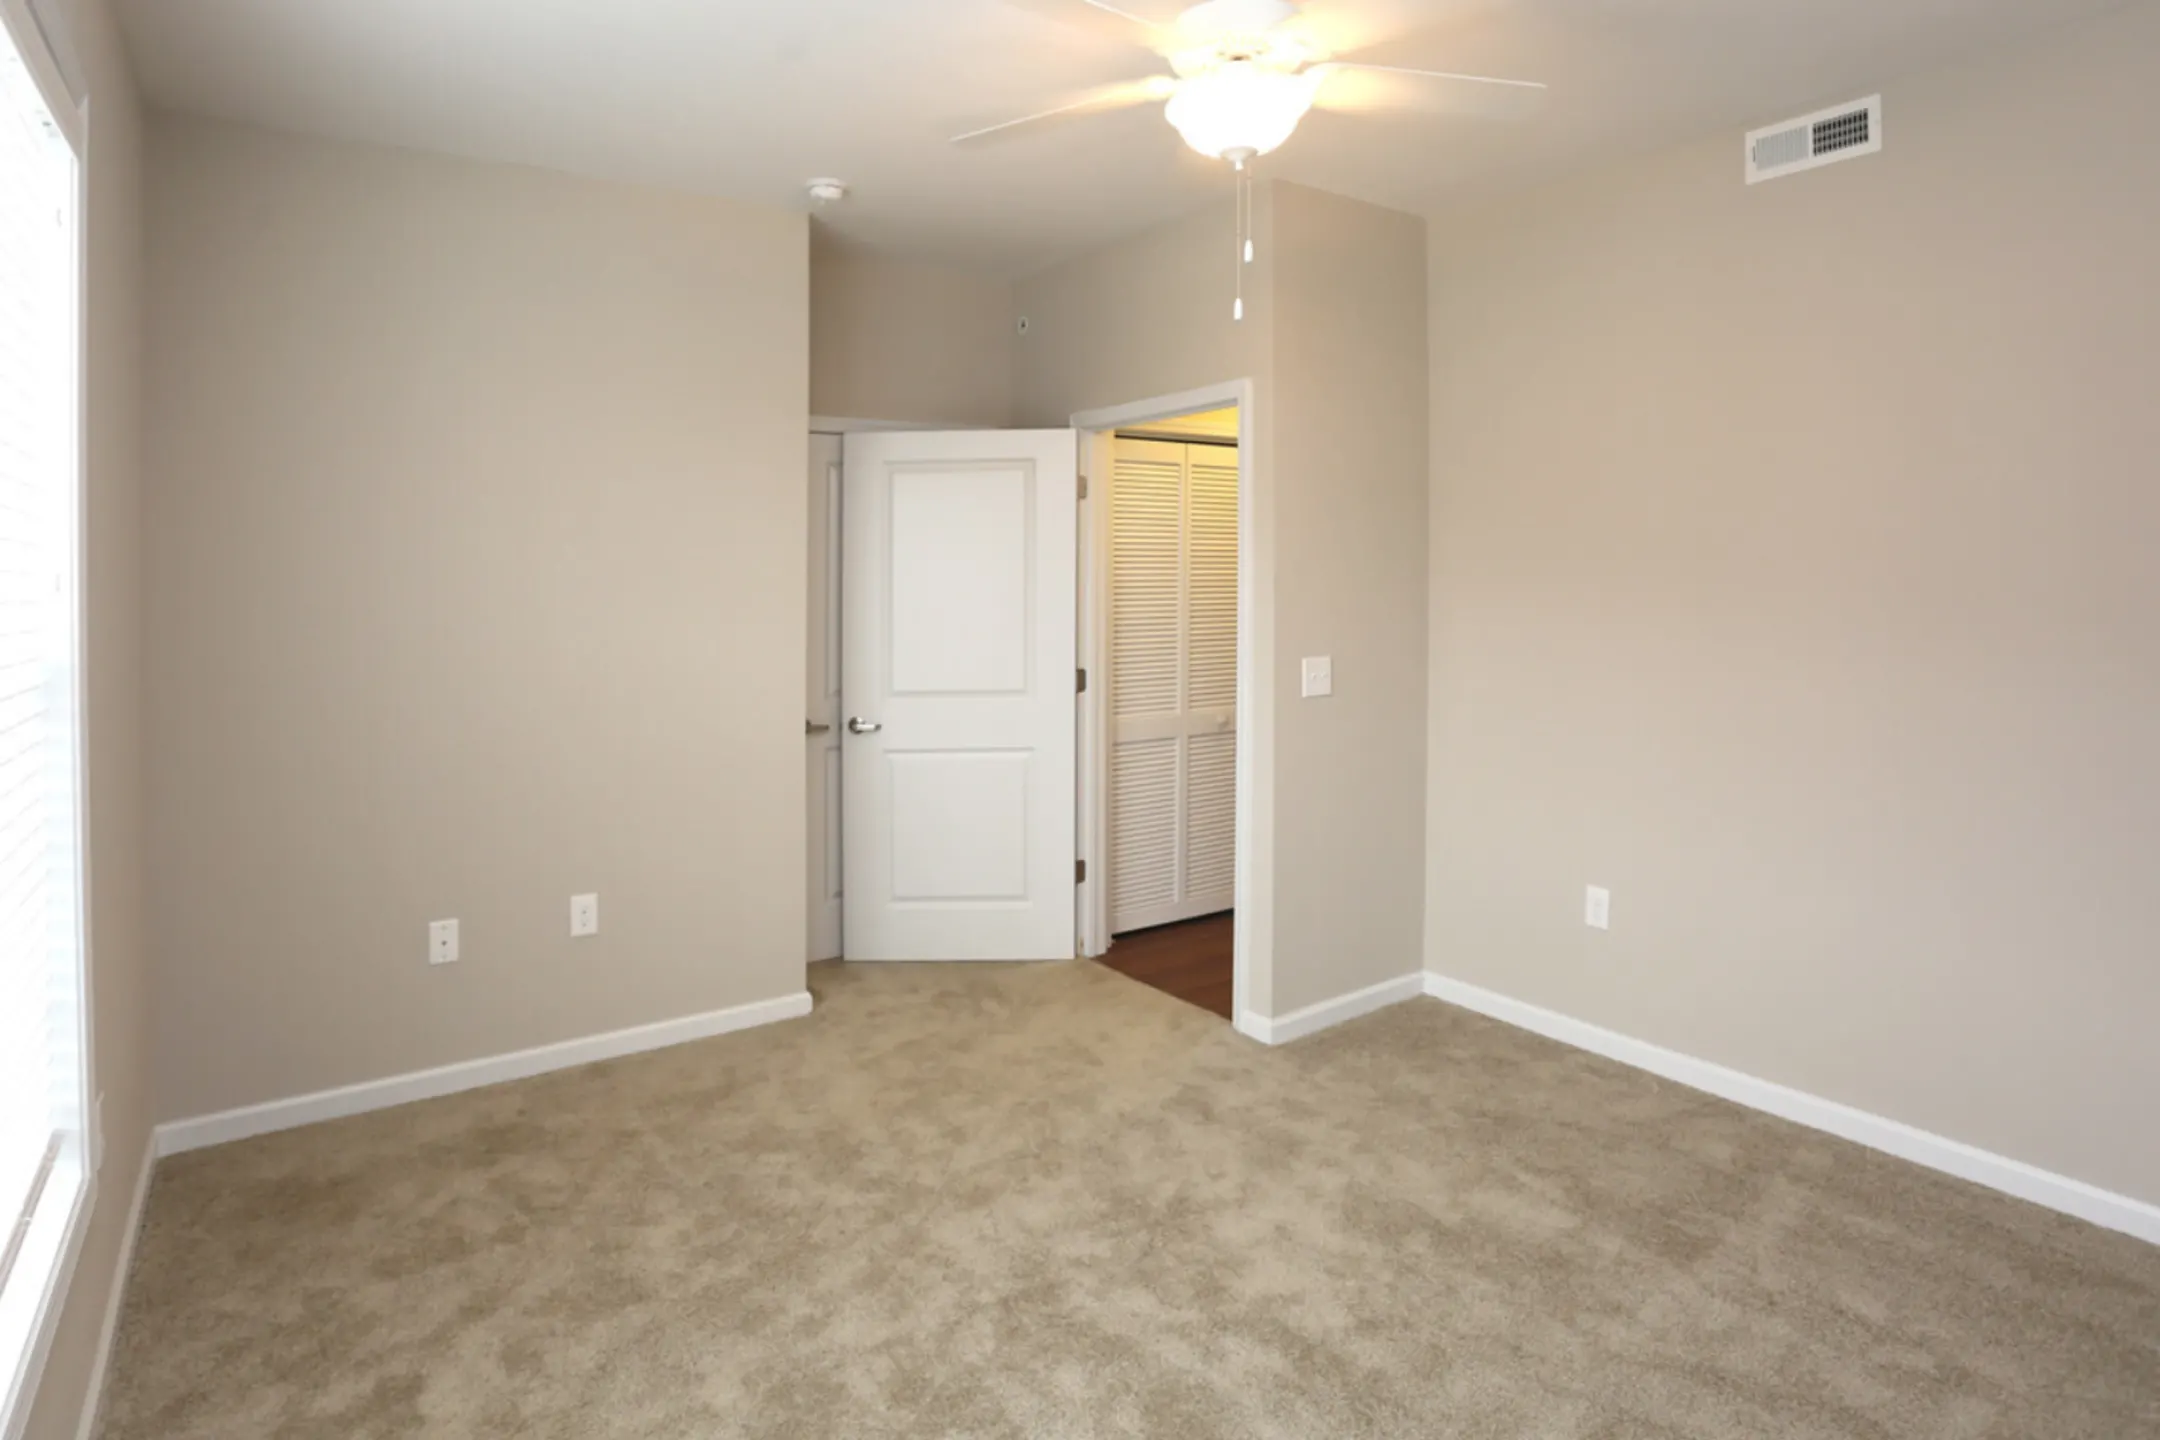 Bedroom - The Aspen Apartments - Roanoke, VA